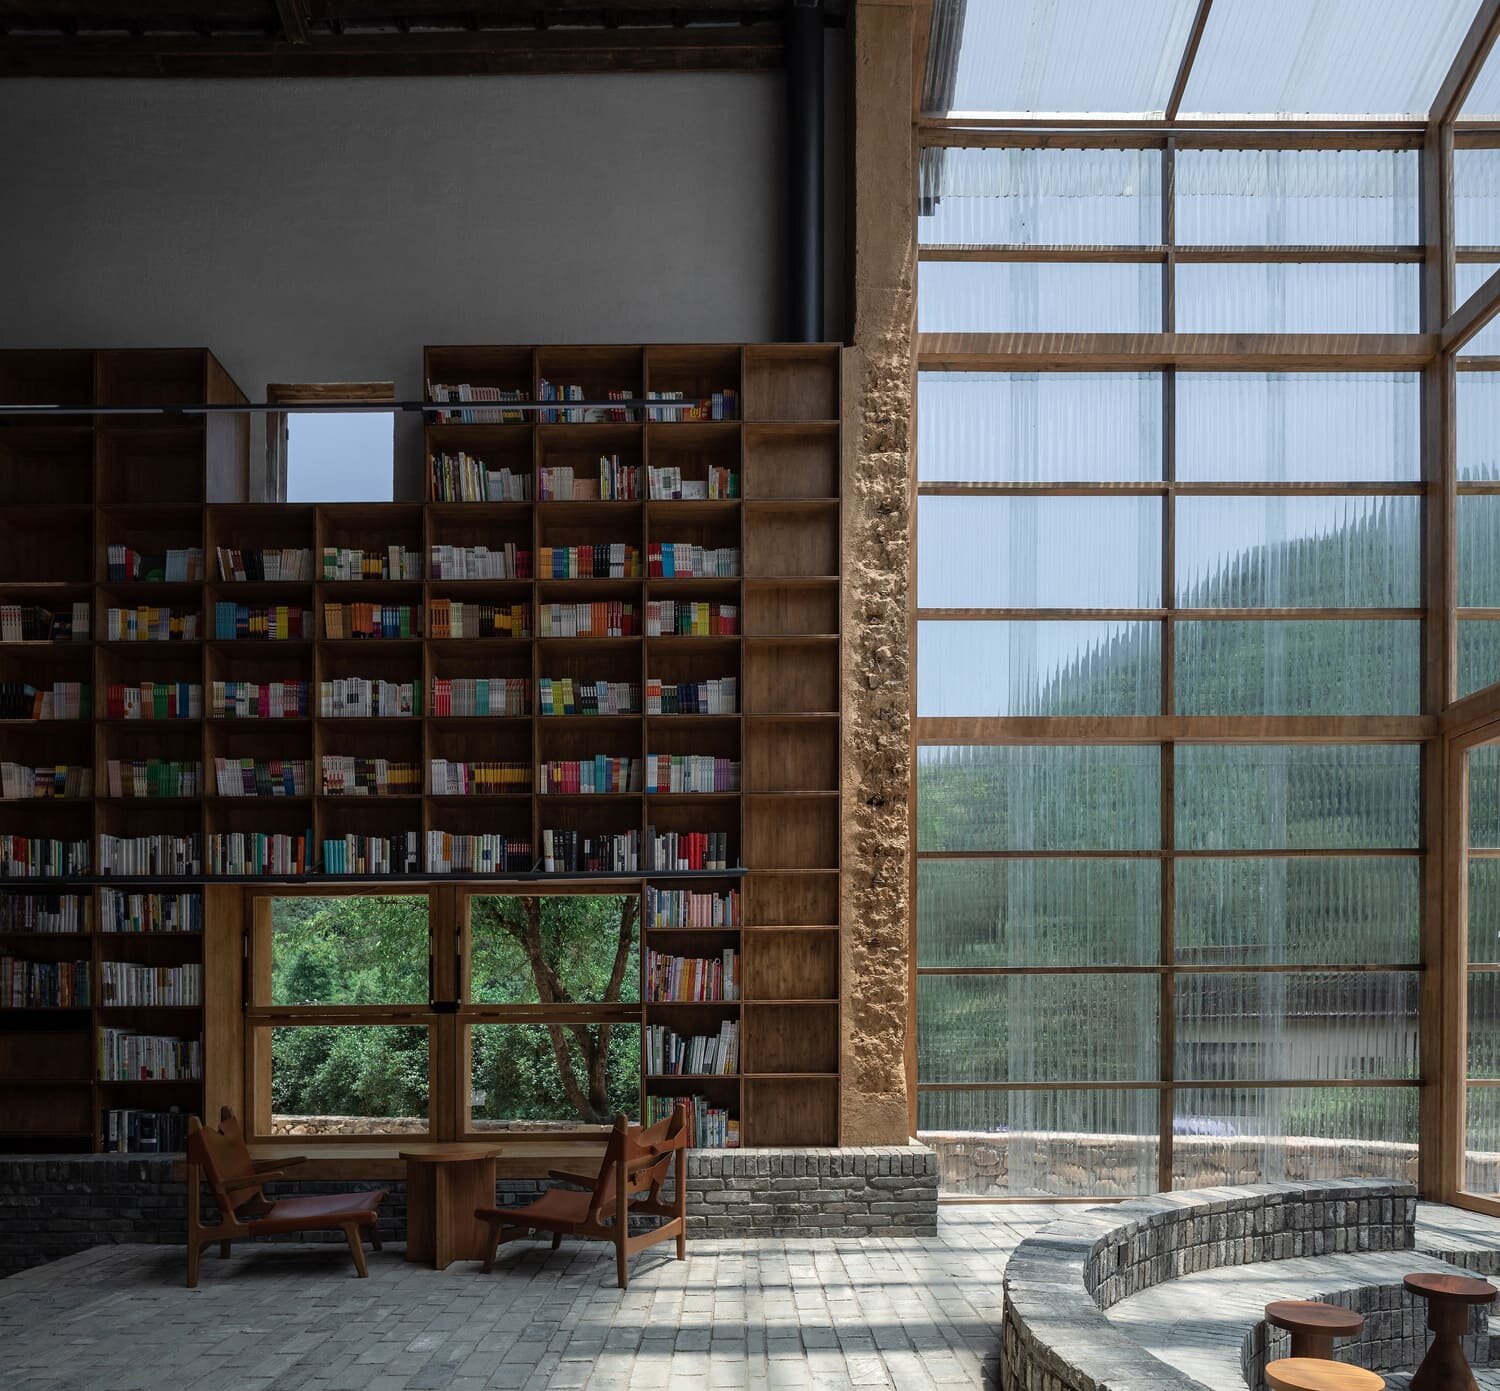 tao+c-Bookstore-Su Sheng Liang-Visual Atelier 8-Architecture-5.jpg